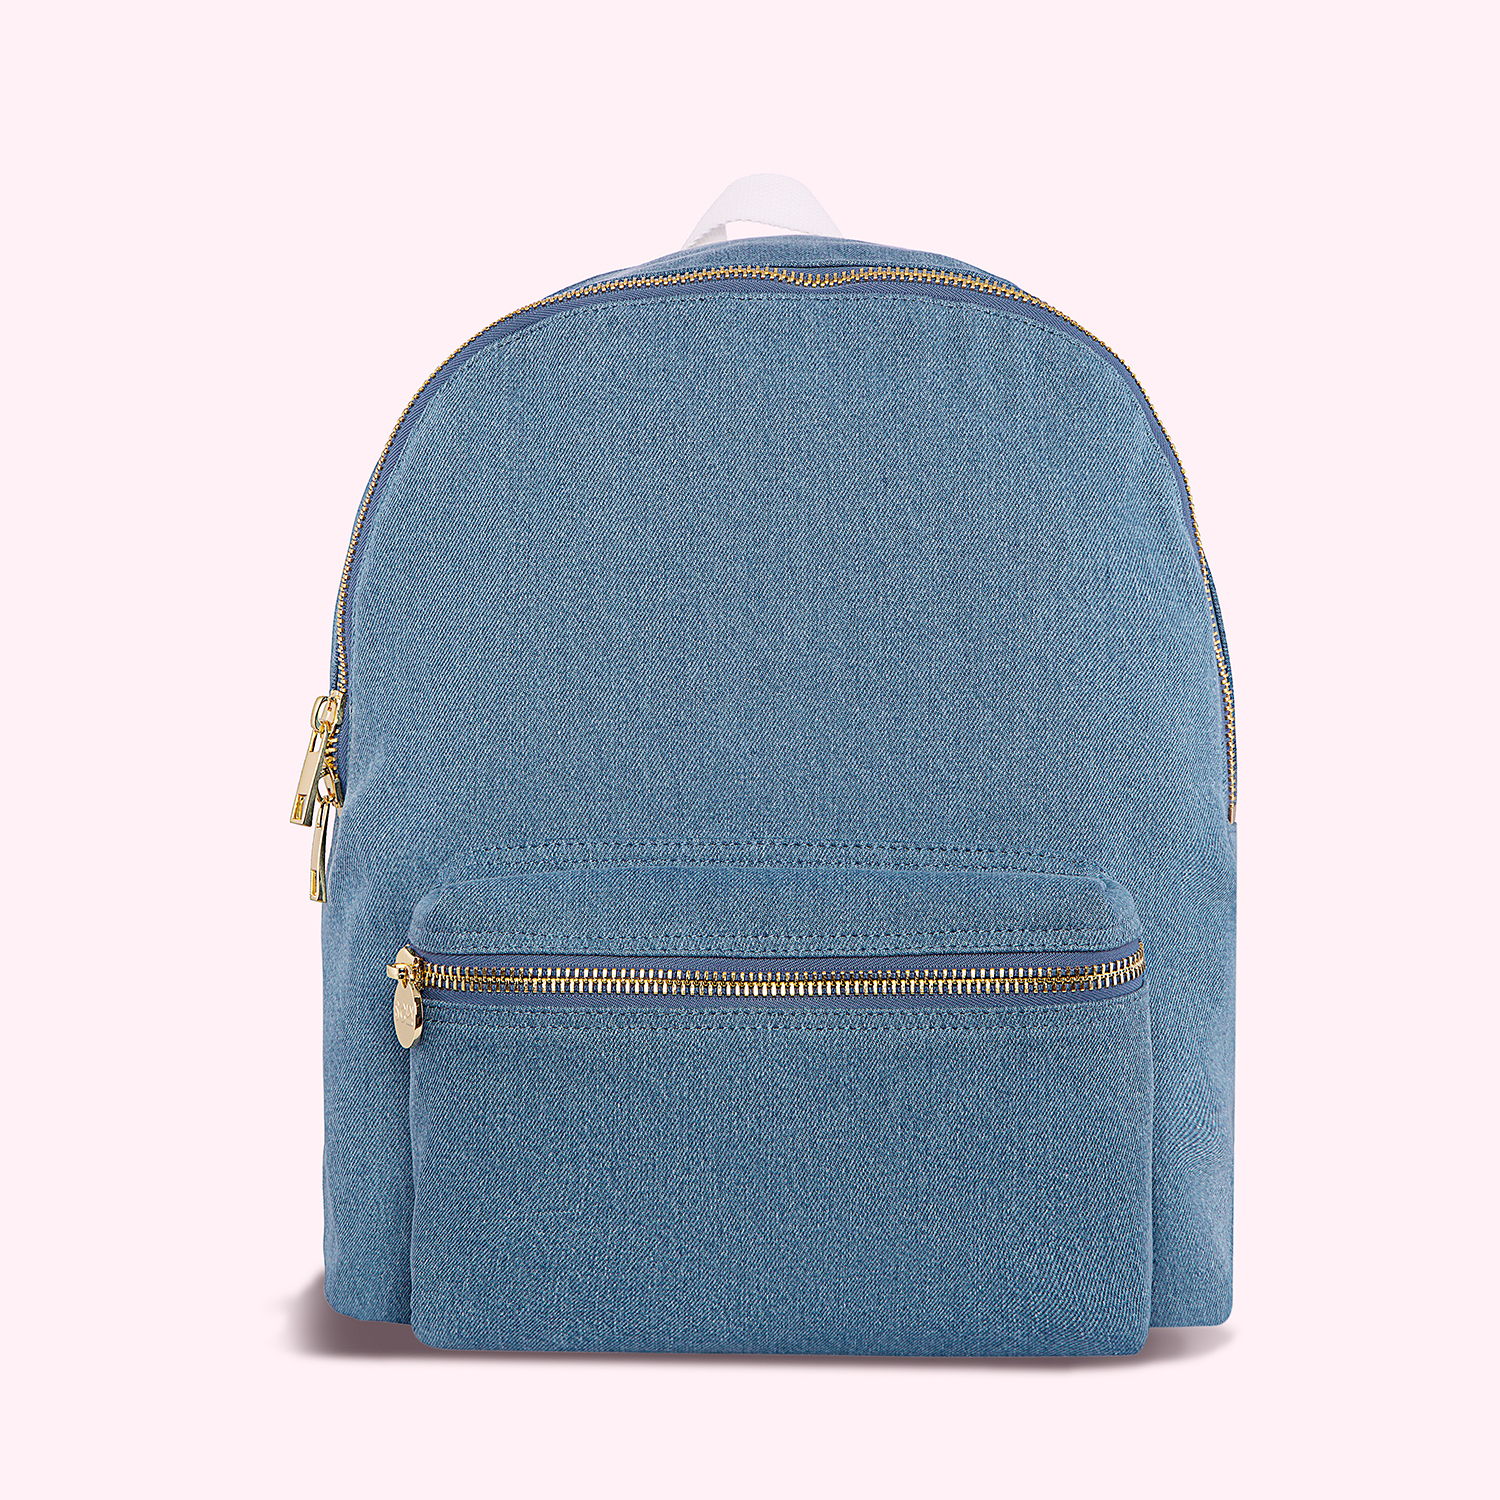 True Religion Backpack Blue Denim Tie Dye Wash Pocket School Book Bag  Zipper | eBay